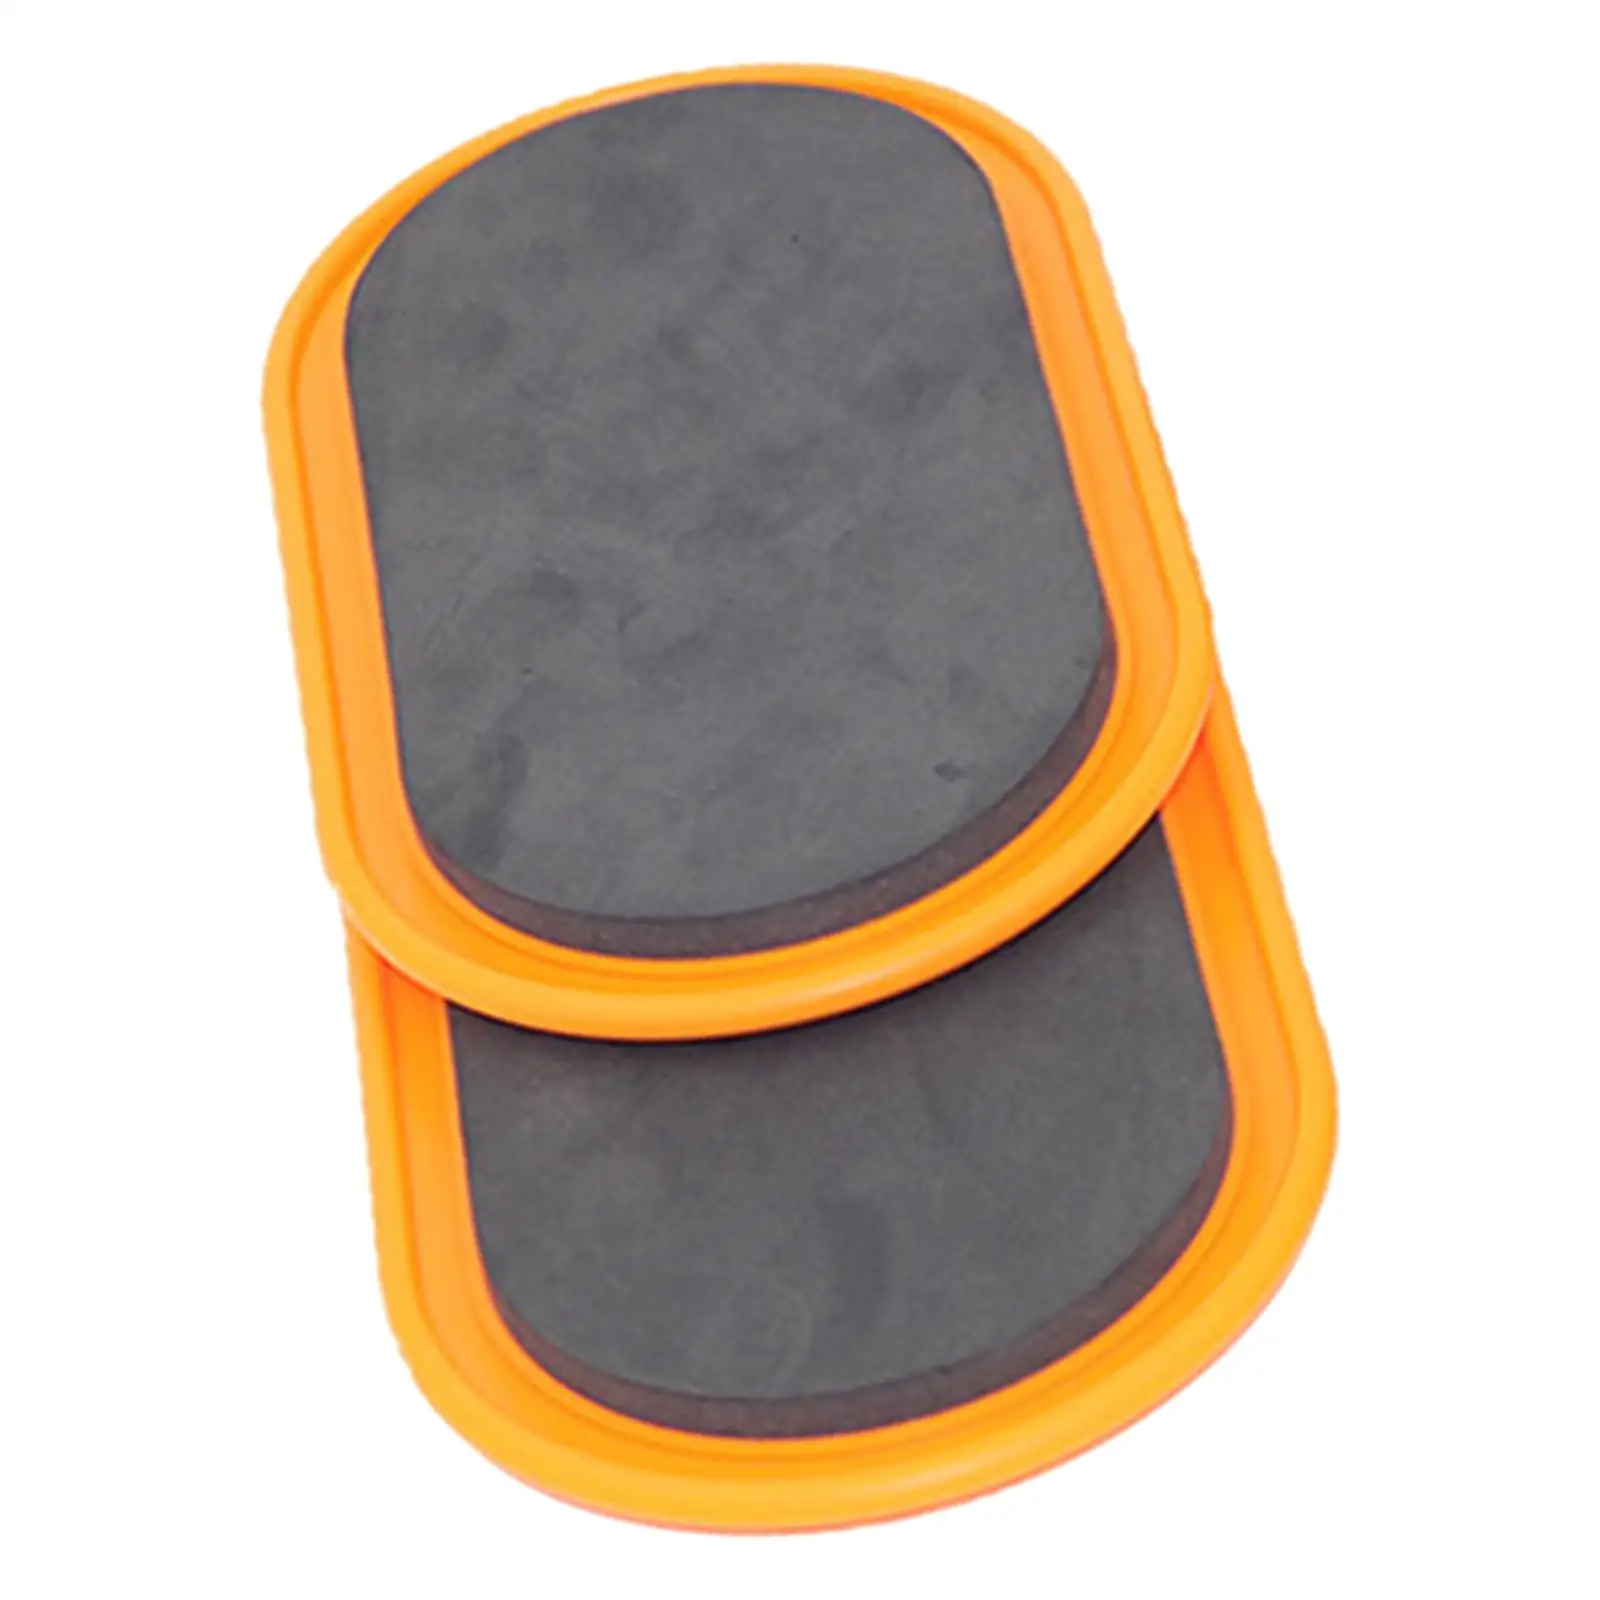 Sliding Mat Yoga Knee Pad Gliding Discs Core Slider Lightweight Training Gym